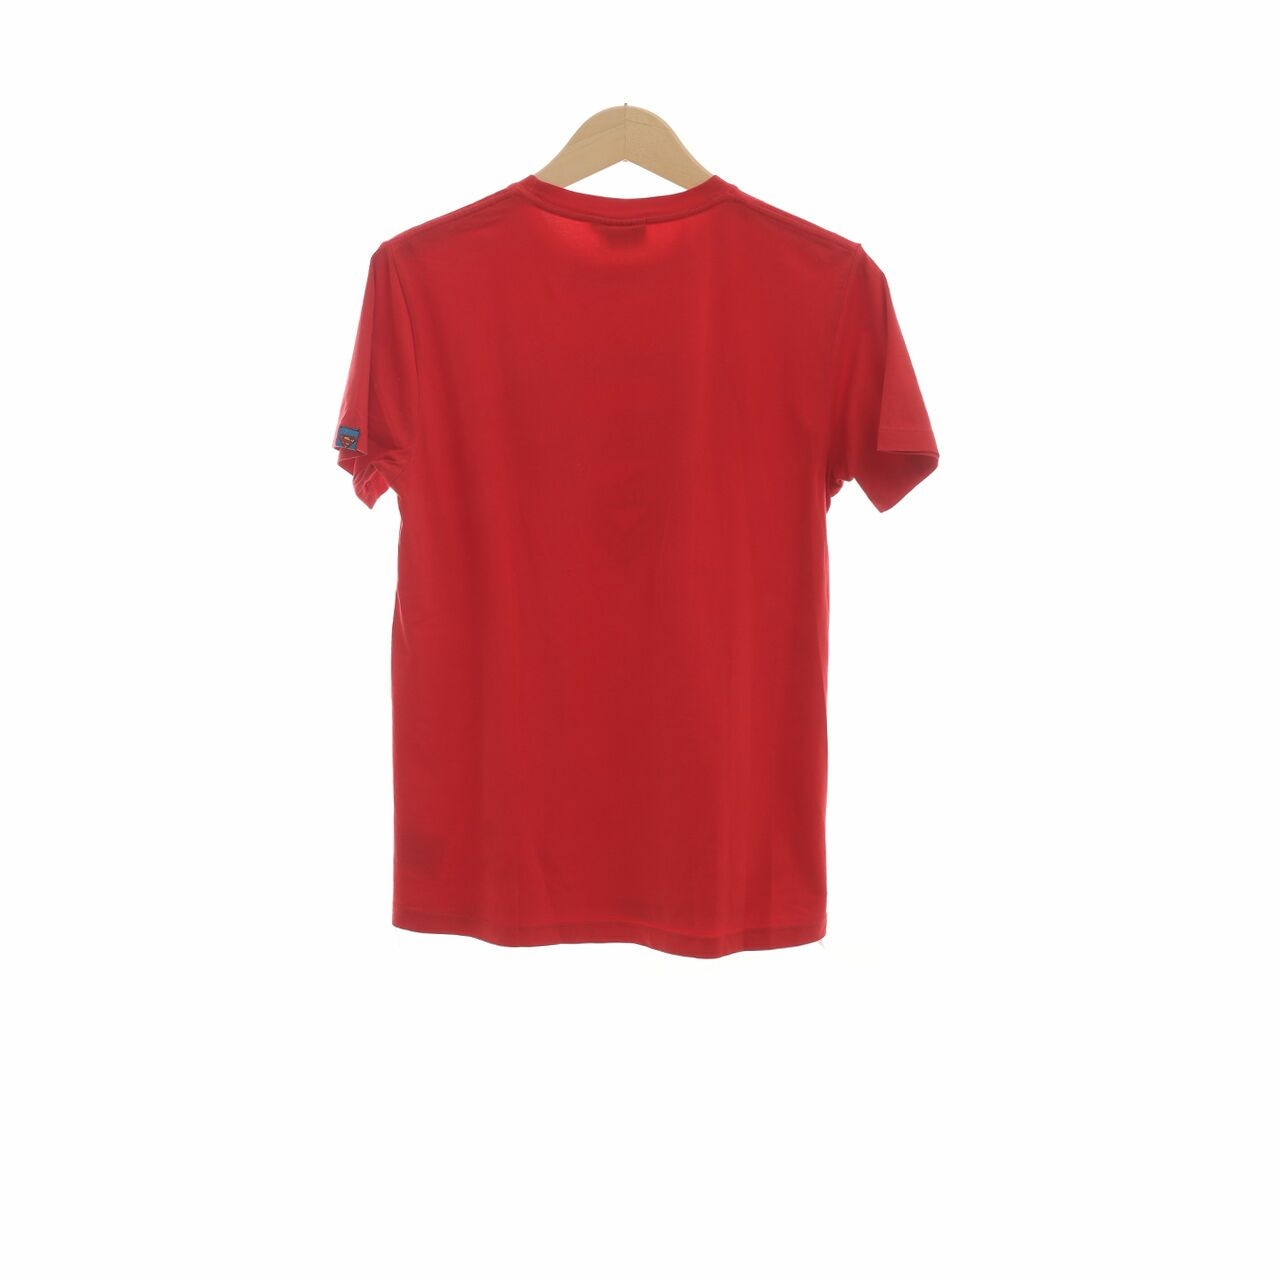 Marvel Red Superman T-Shirt